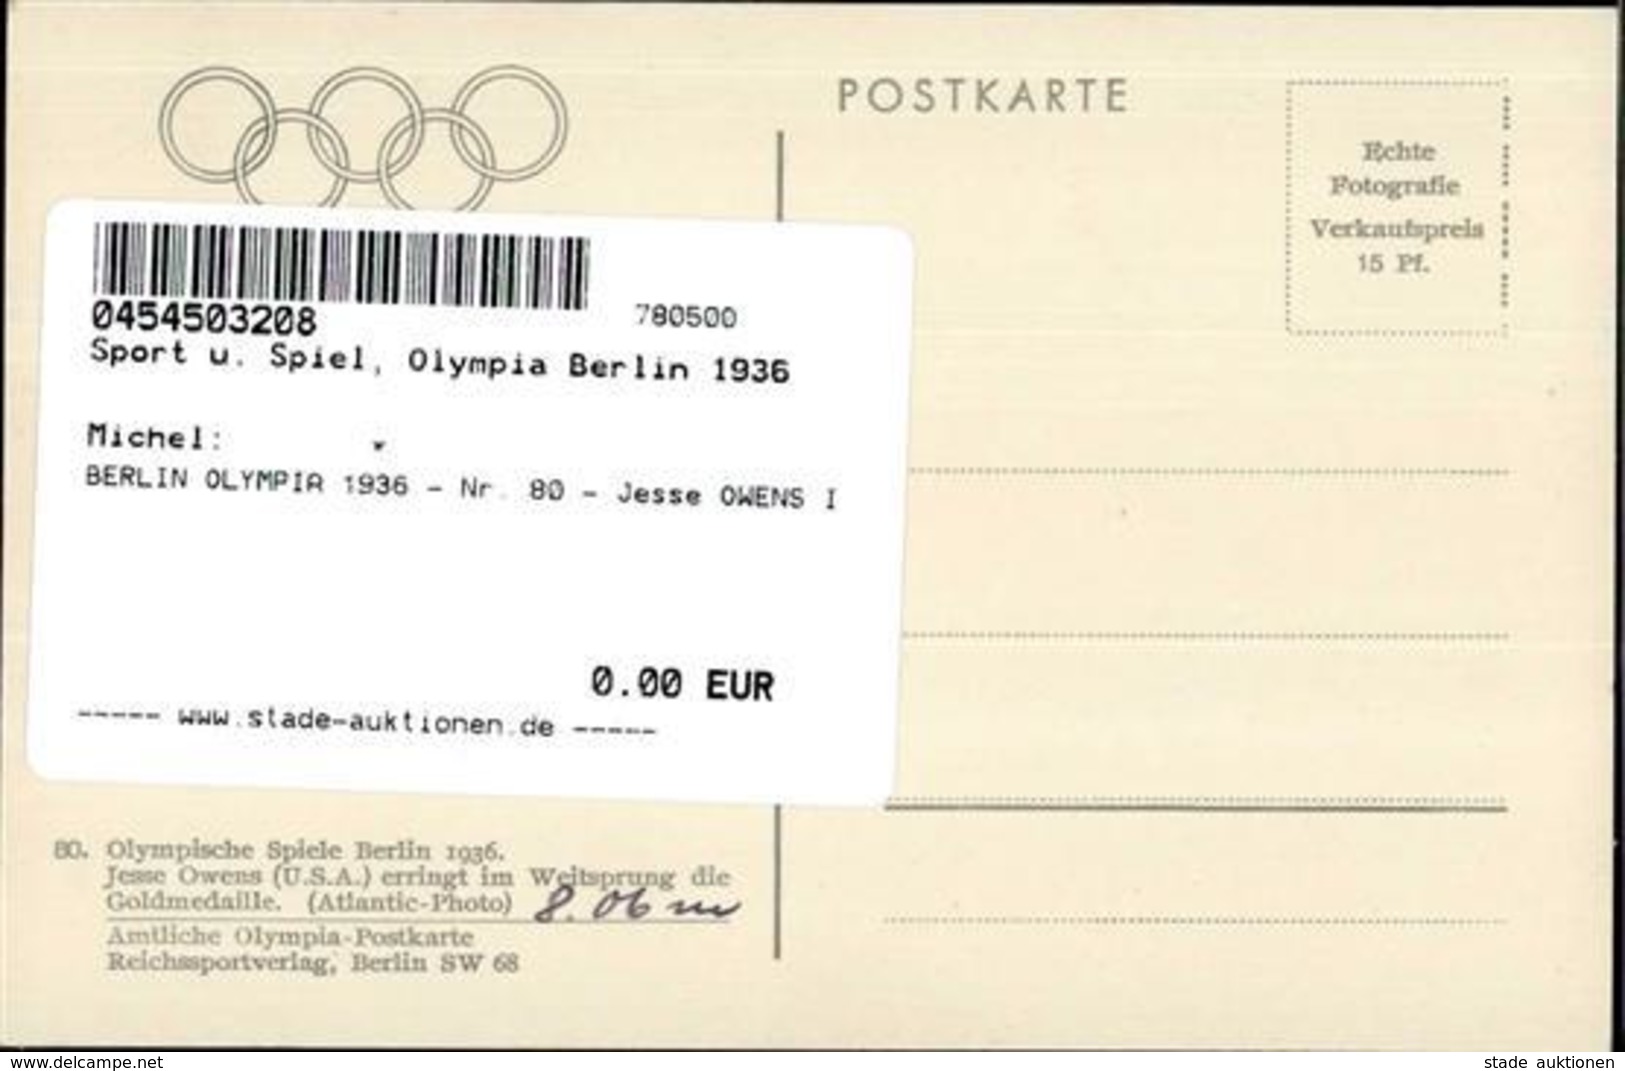 BERLIN OLYMPIA 1936 - Nr. 80 - Jesse OWENS I - Giochi Olimpici